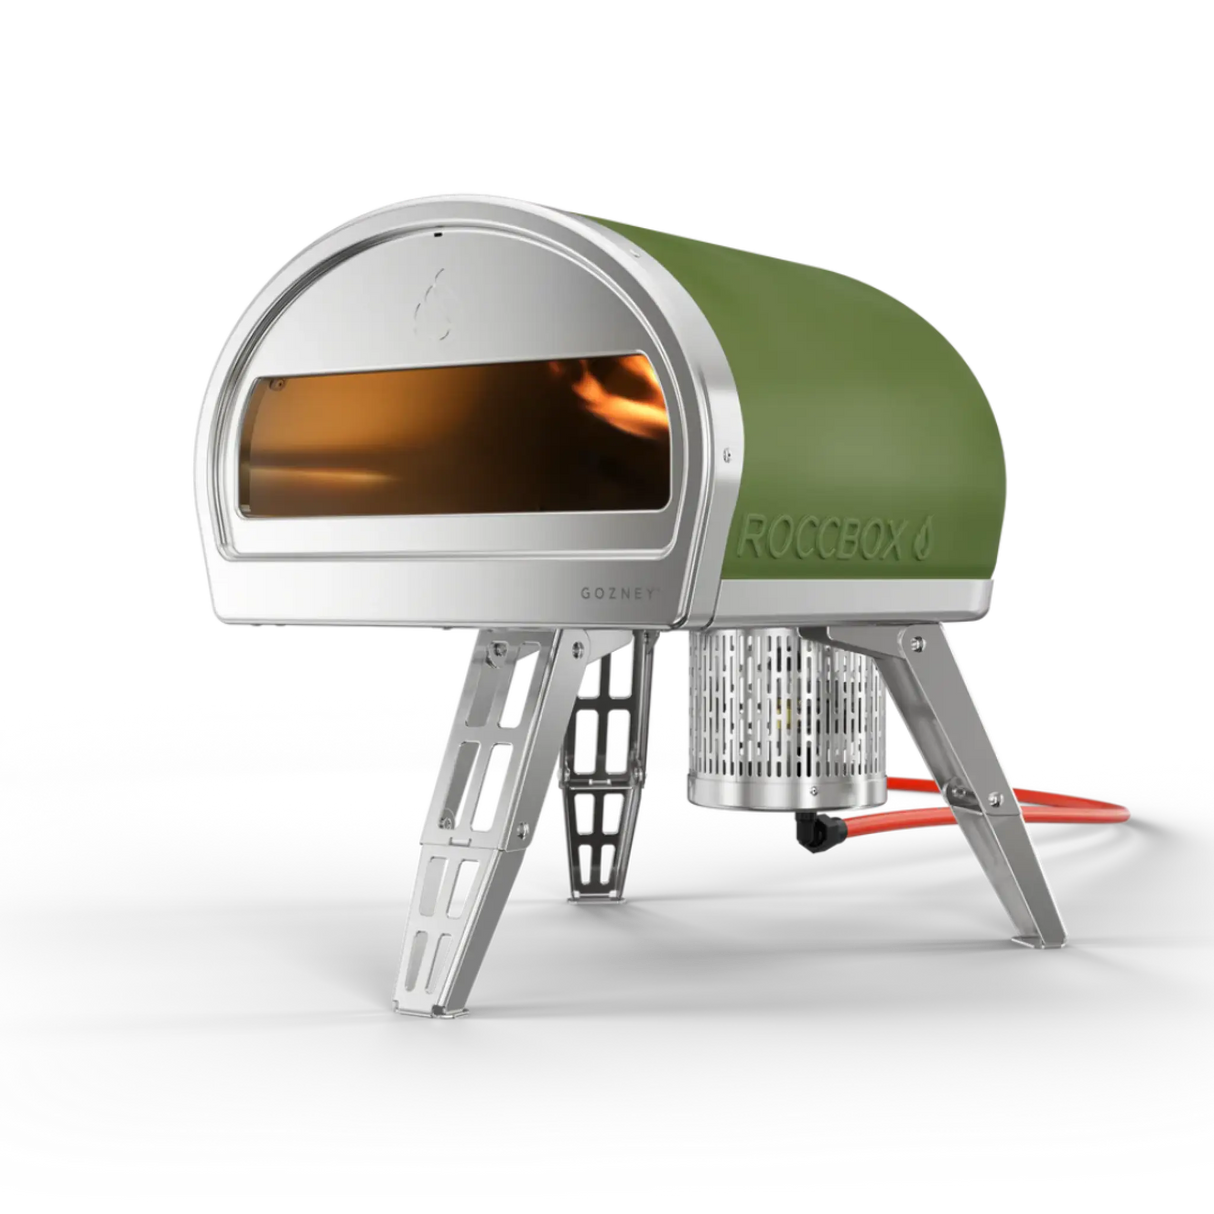 Gozney Roccbox Portable Gas Burning Pizza Oven